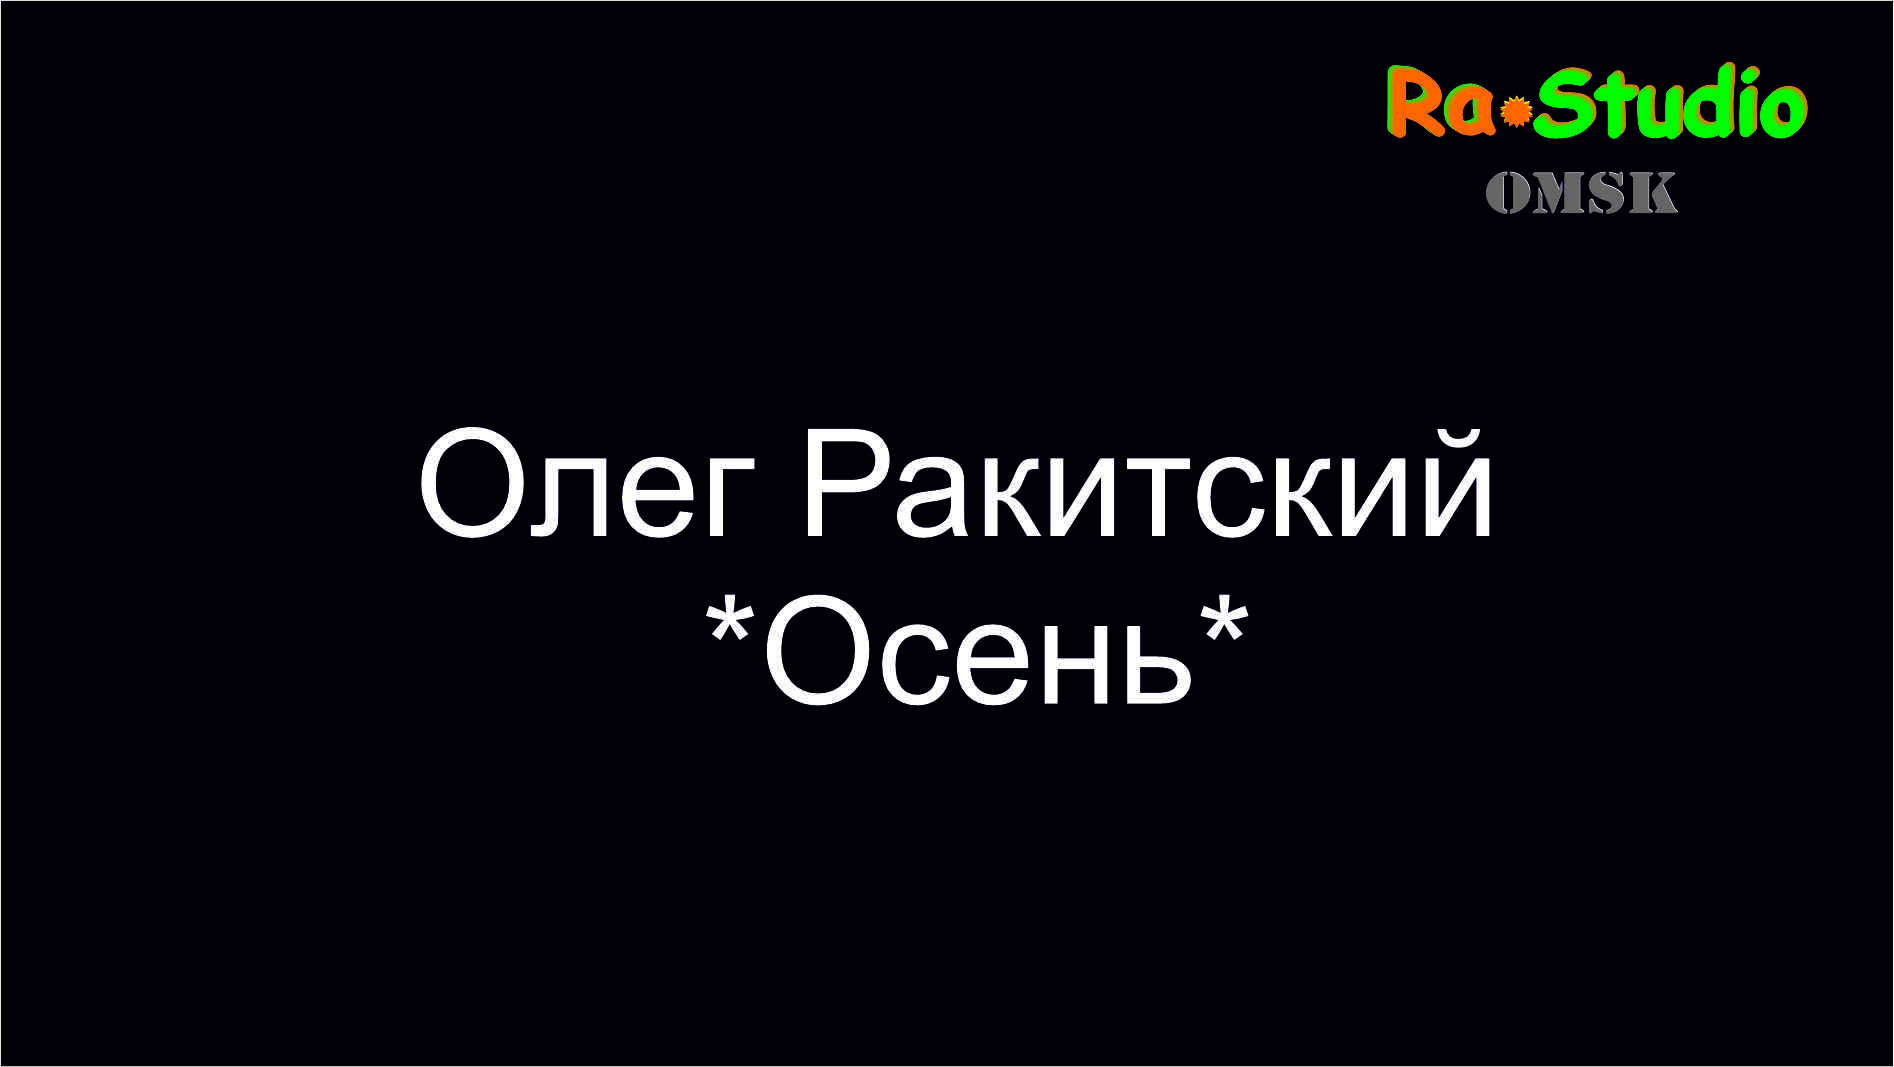 #Ra_Studio_Omsk  "Осень".mp4